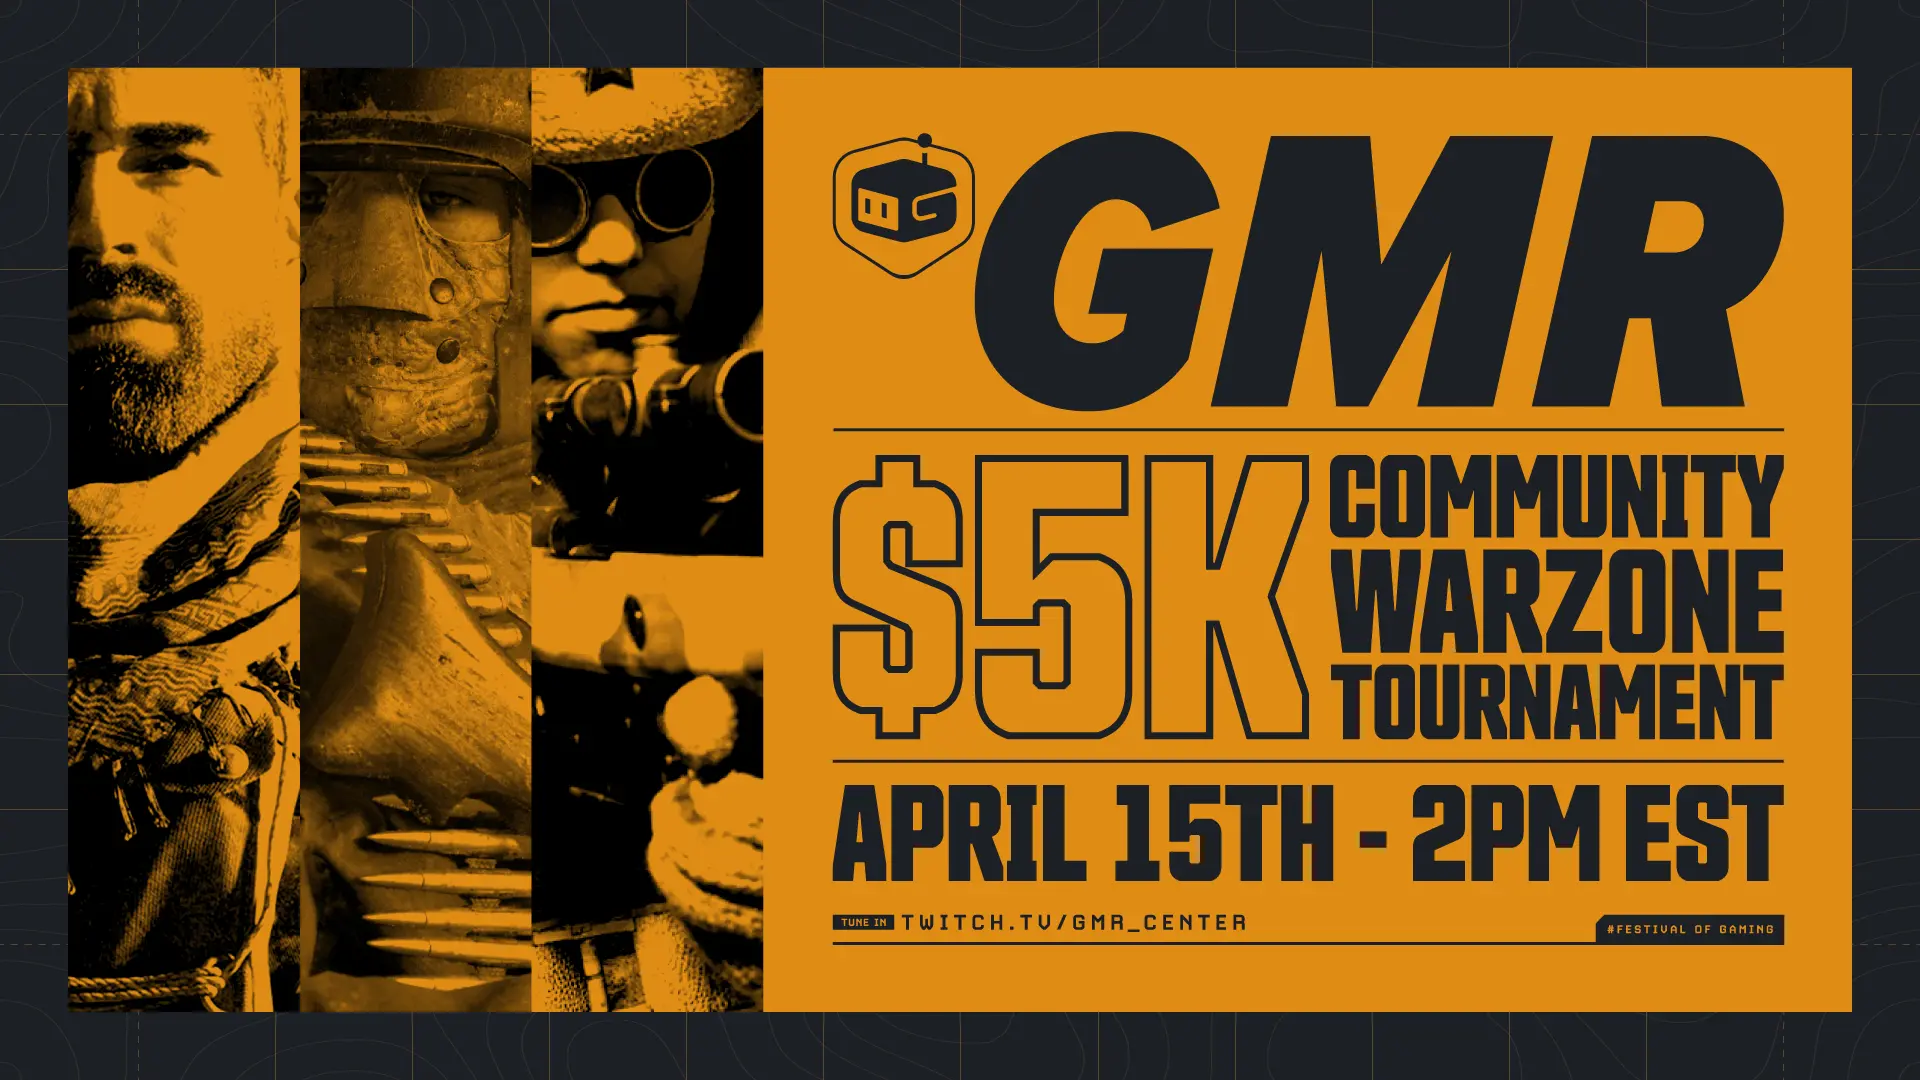 $5,000 Warzone Tournament April 15th